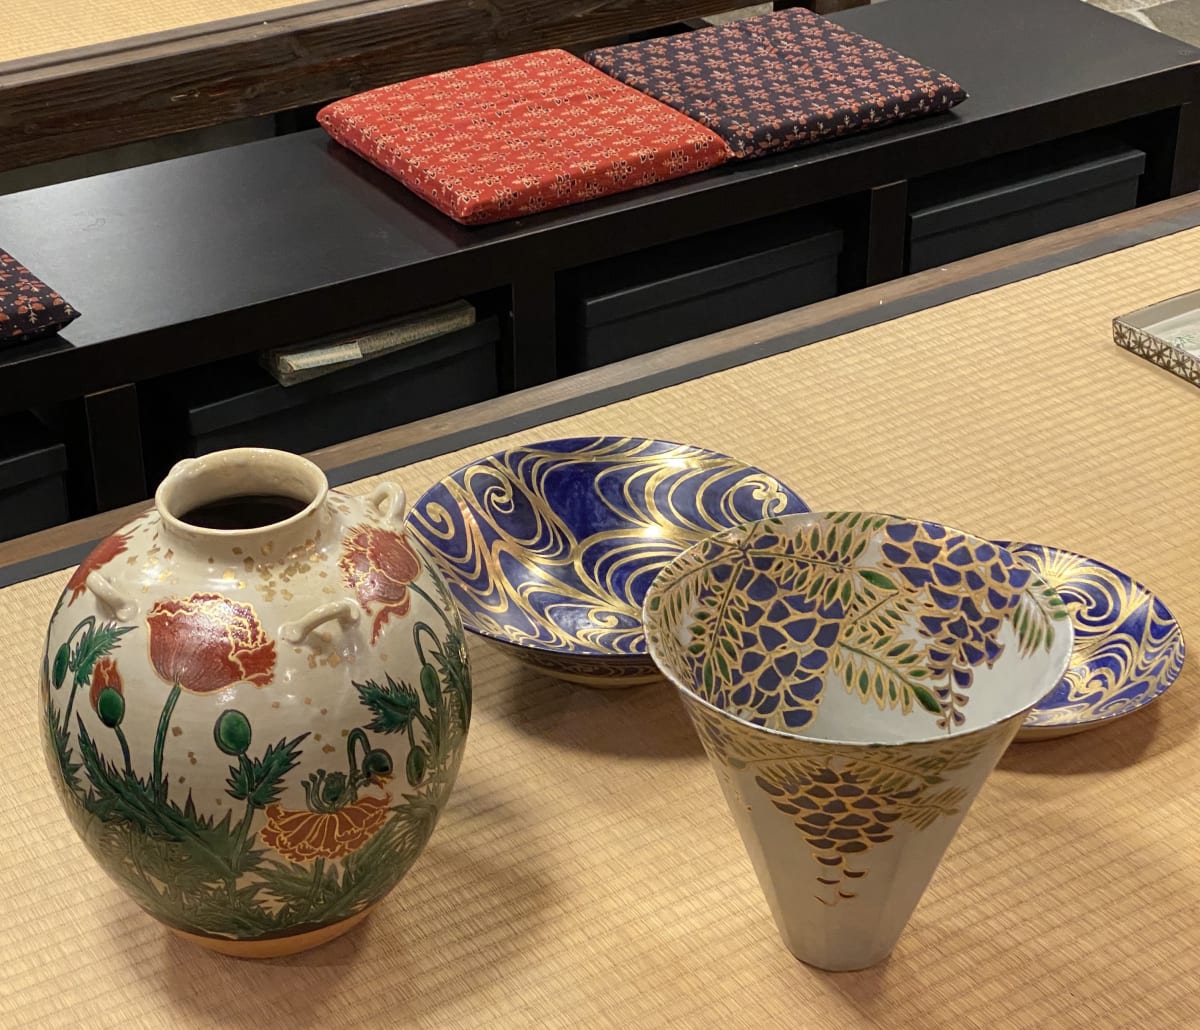 Visiting a Master of Imitation in the Mountains of Karuizawa, The Ceramics of Shion Tabata